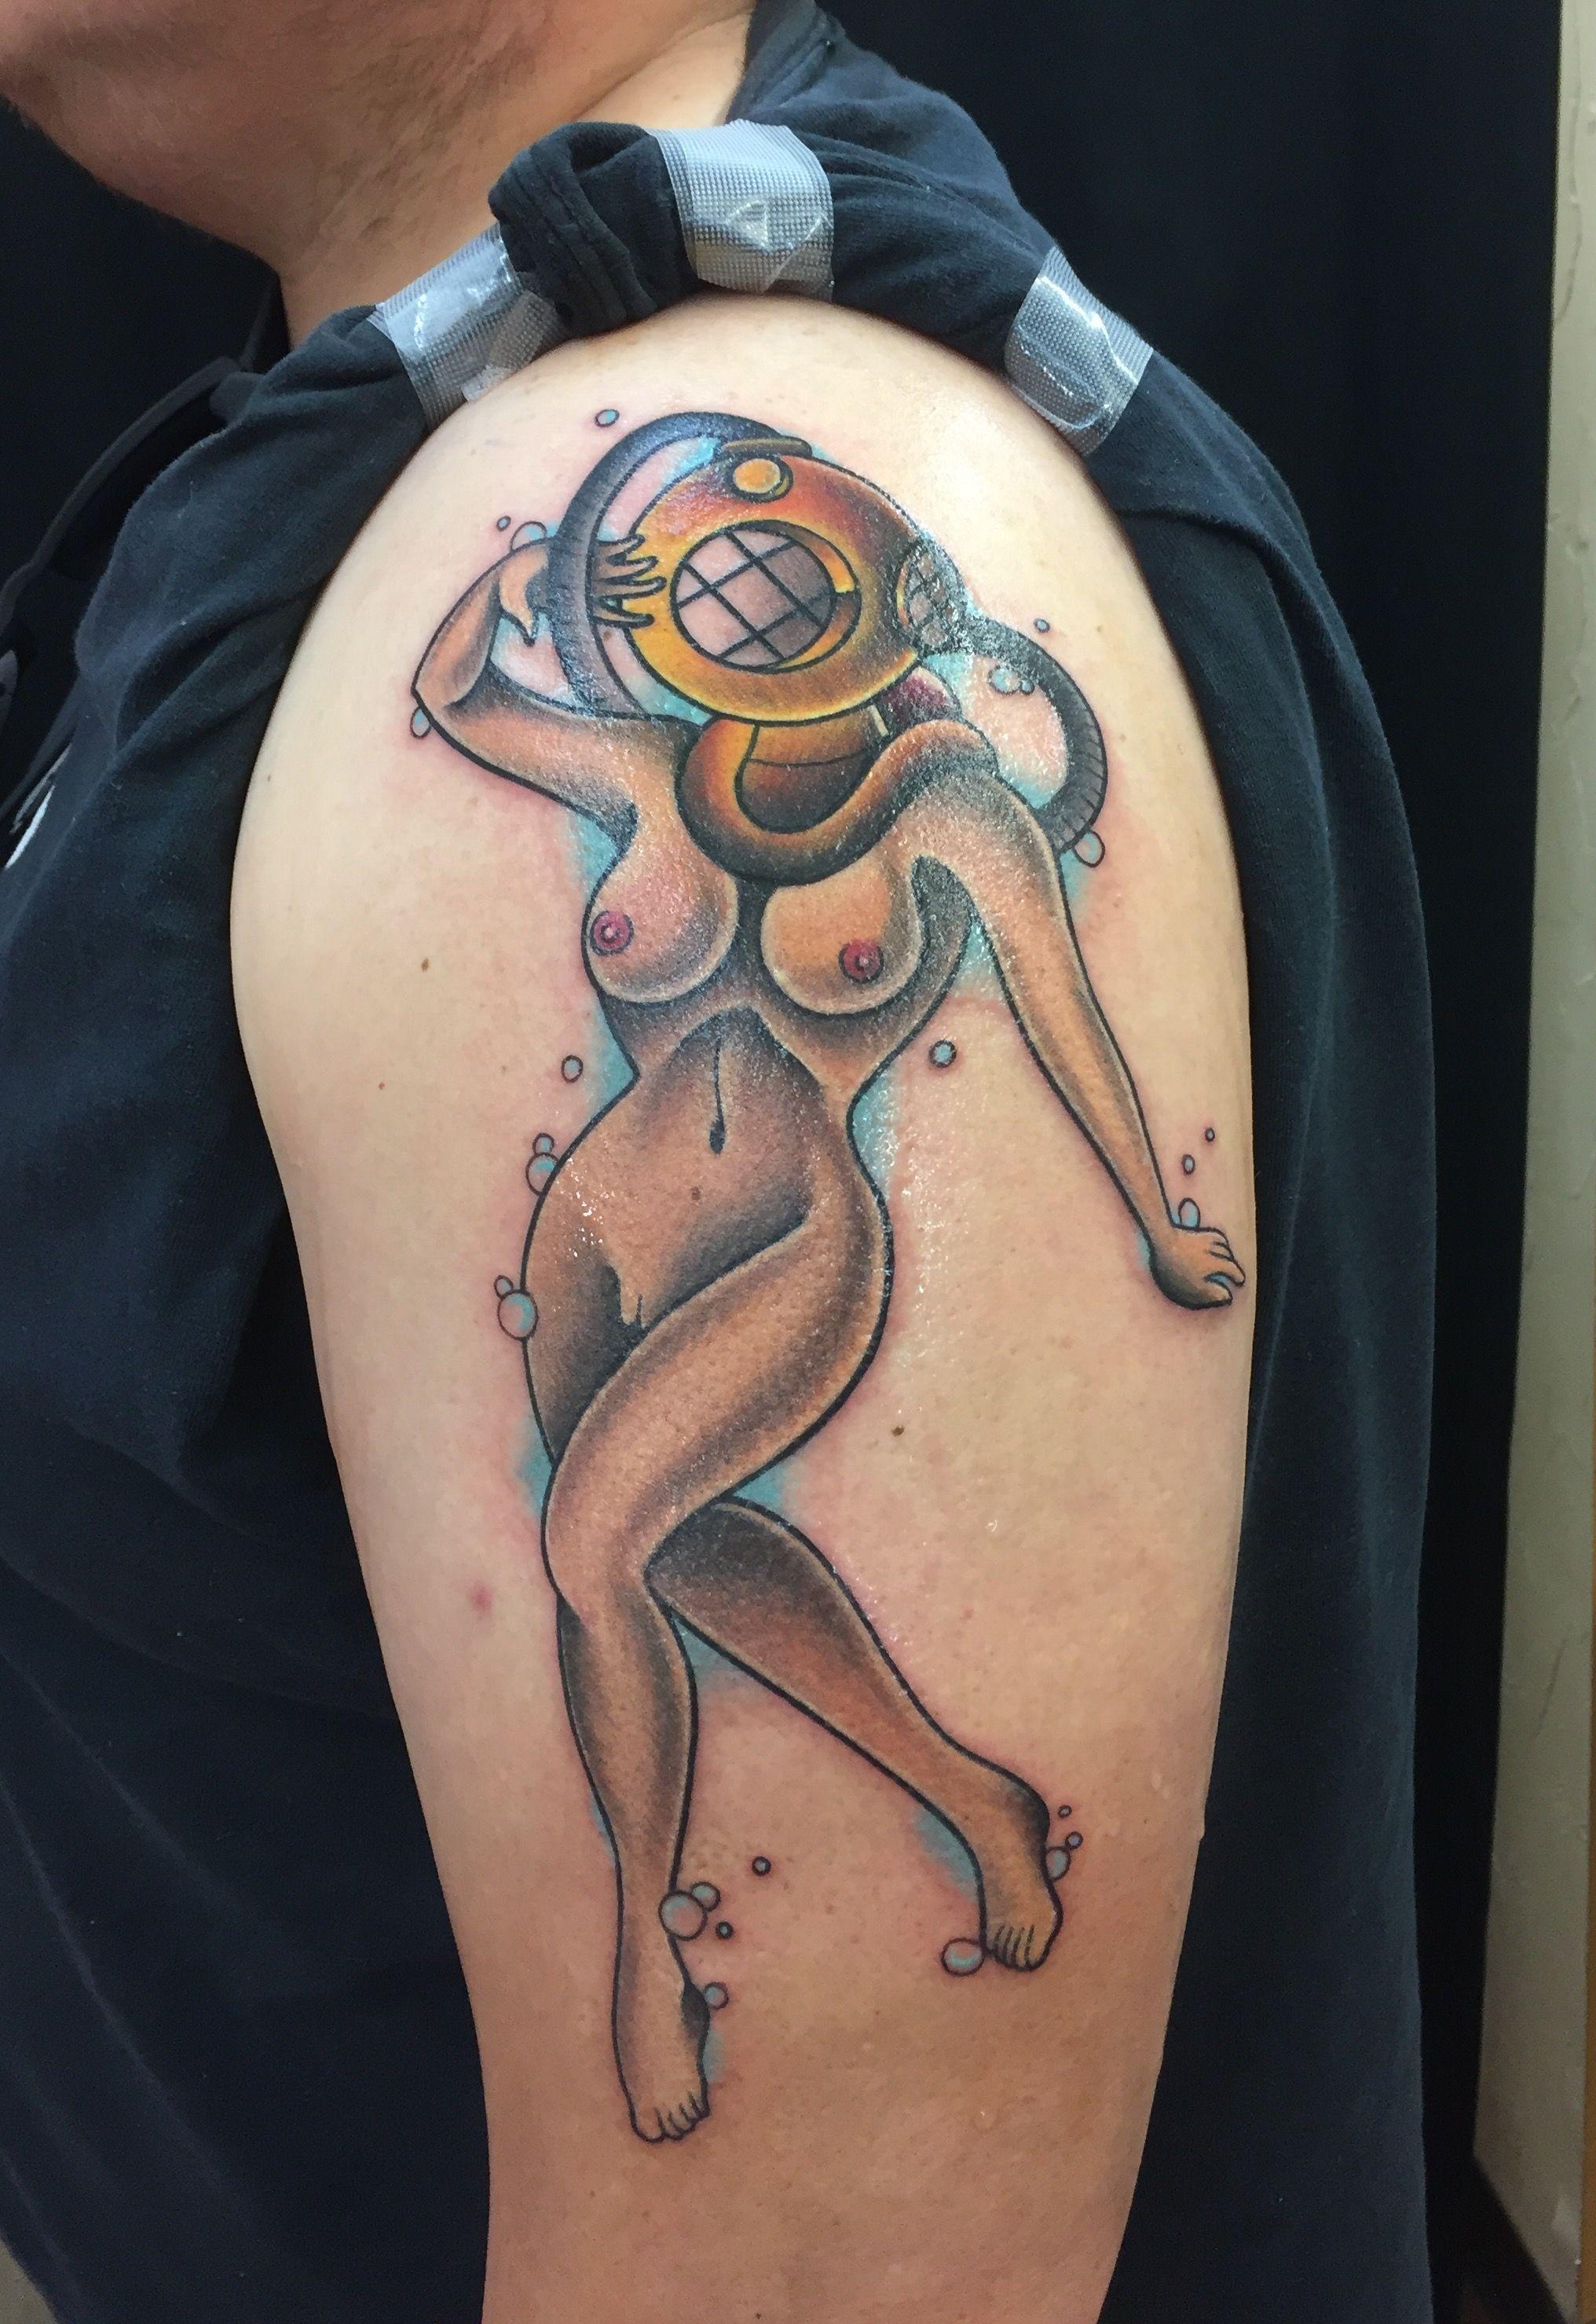 Tattoo of a nude hirl